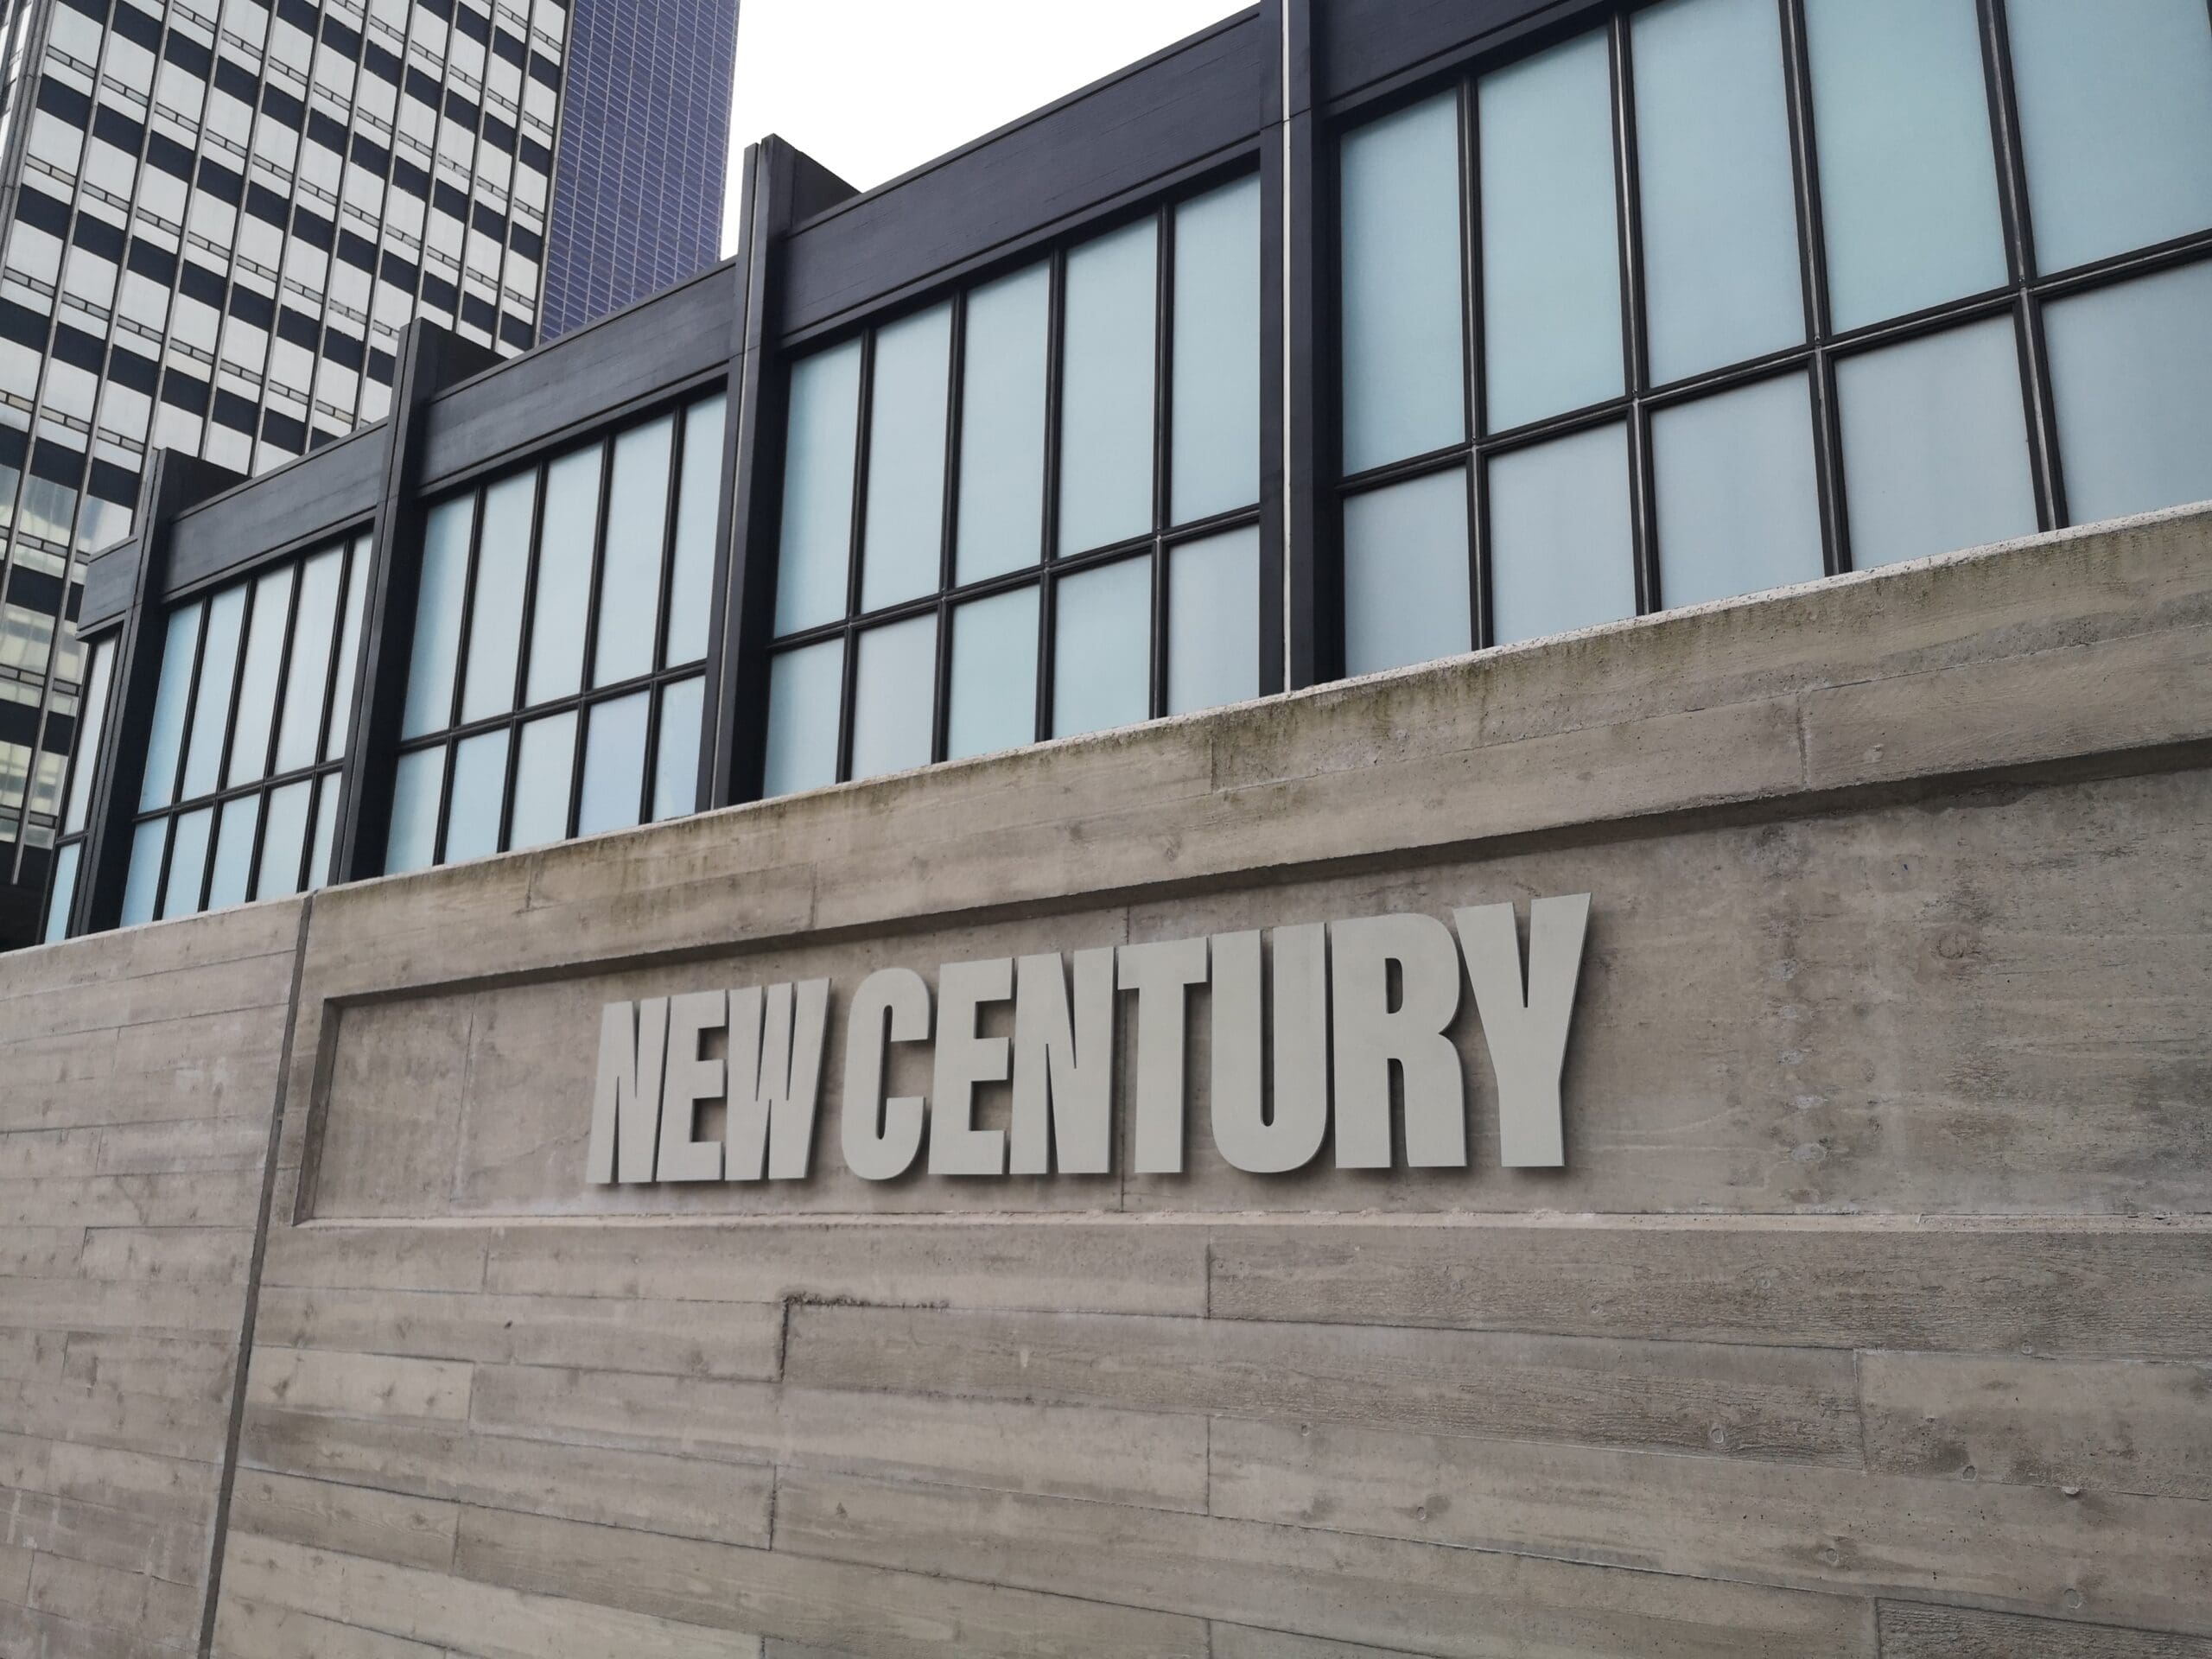 New Century is now open!